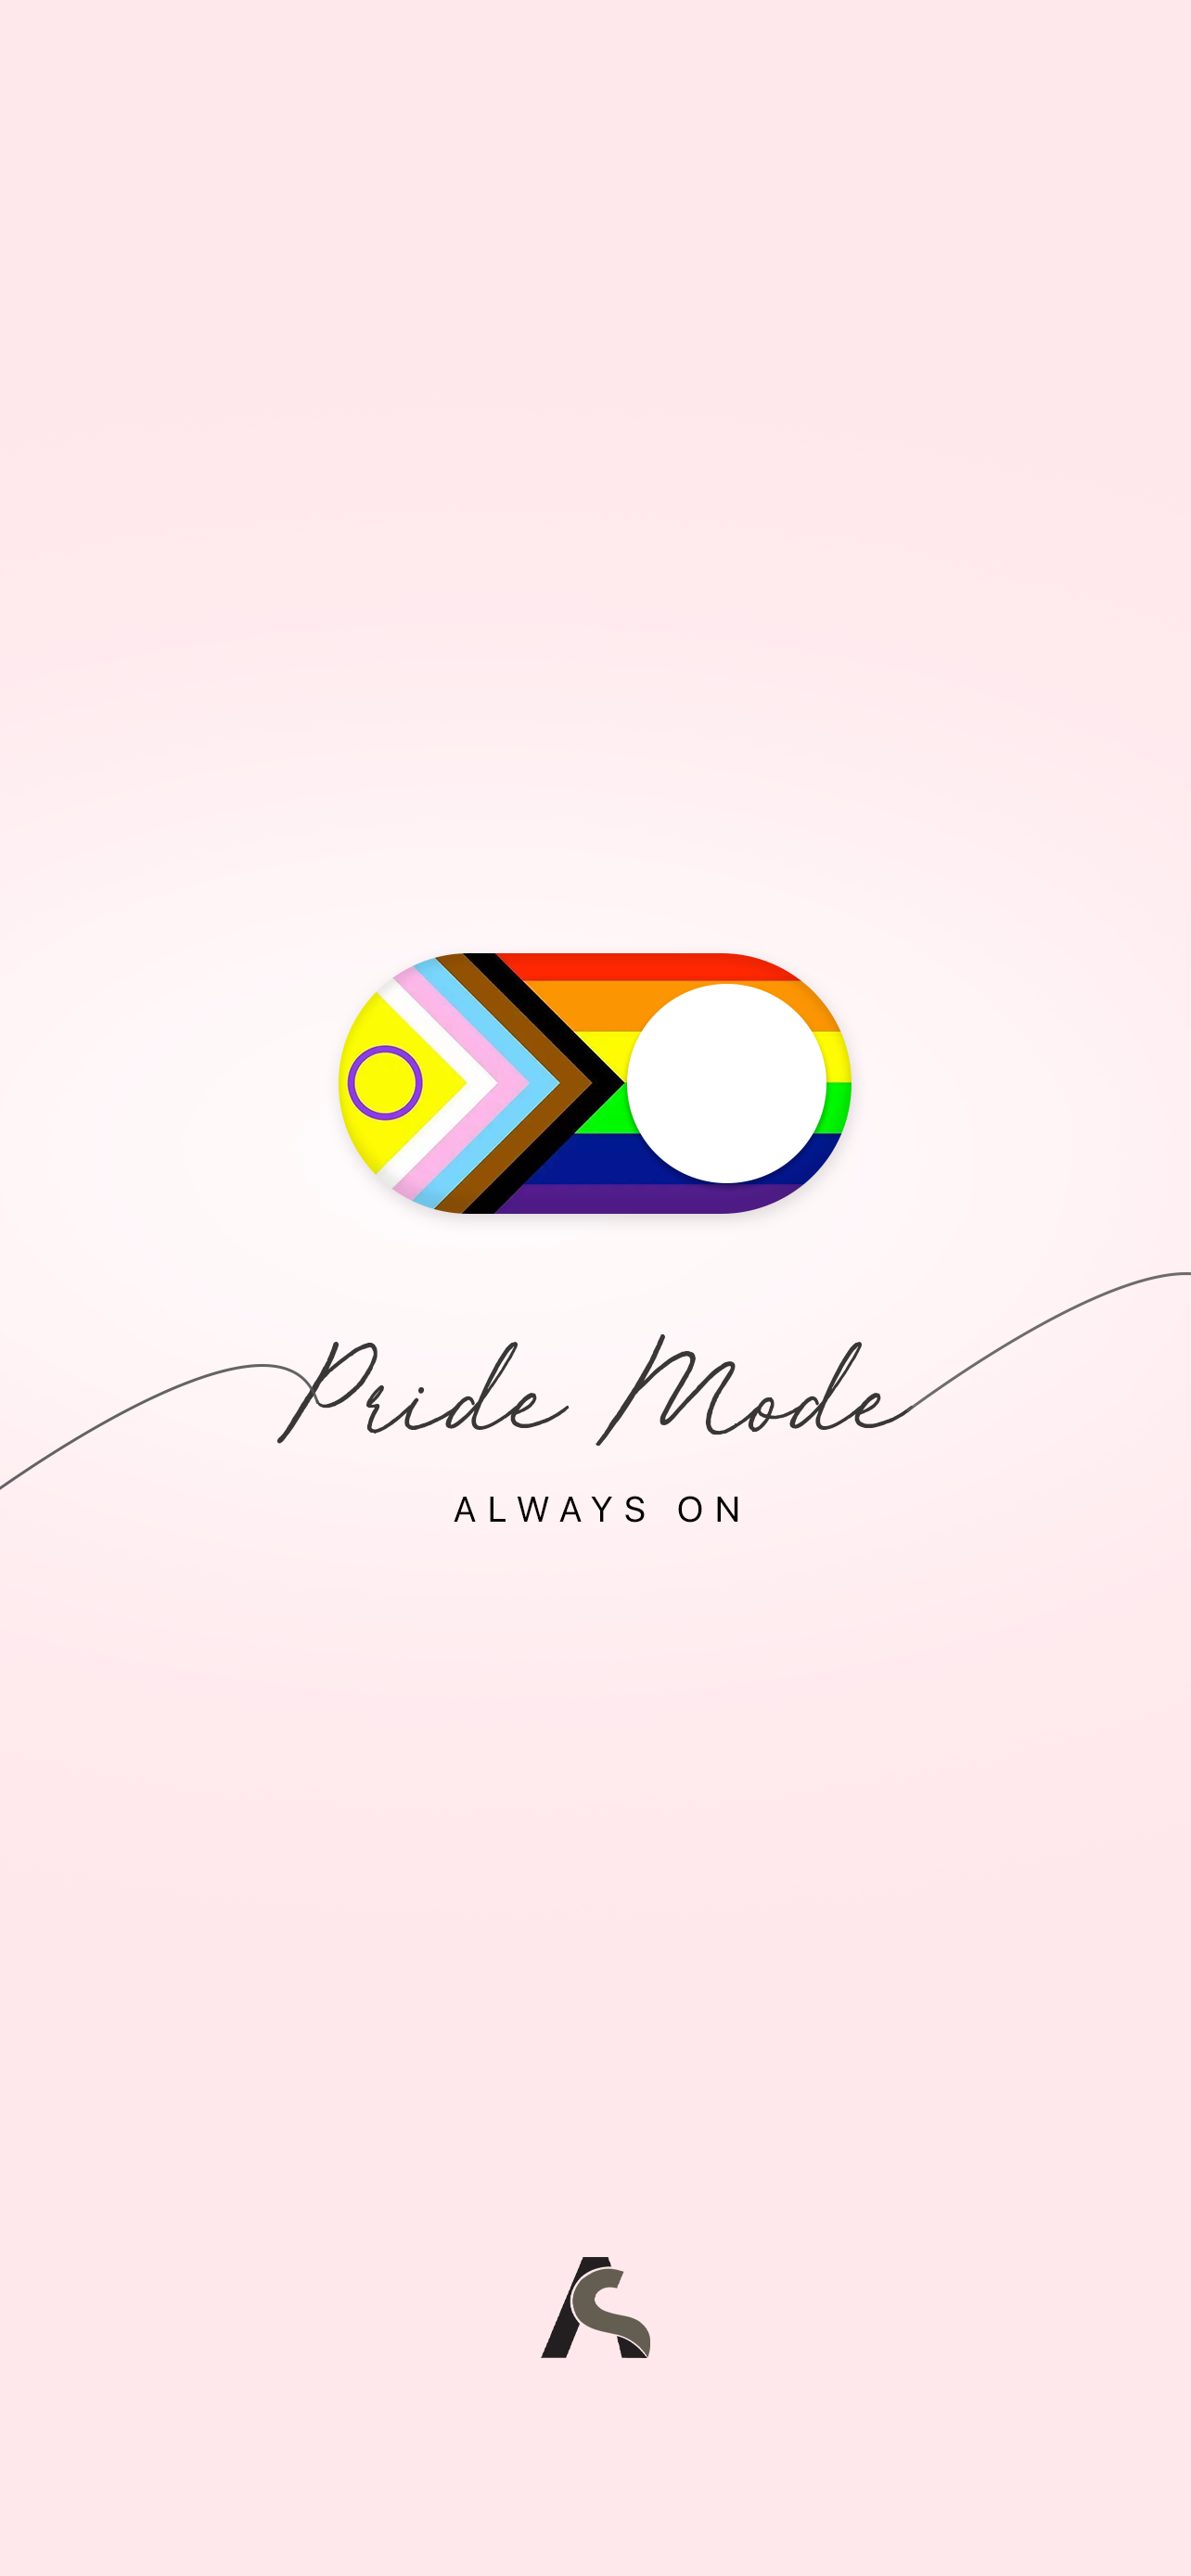 LGBTQIA+ pride wallpapers – 60 FREE options - June 2023